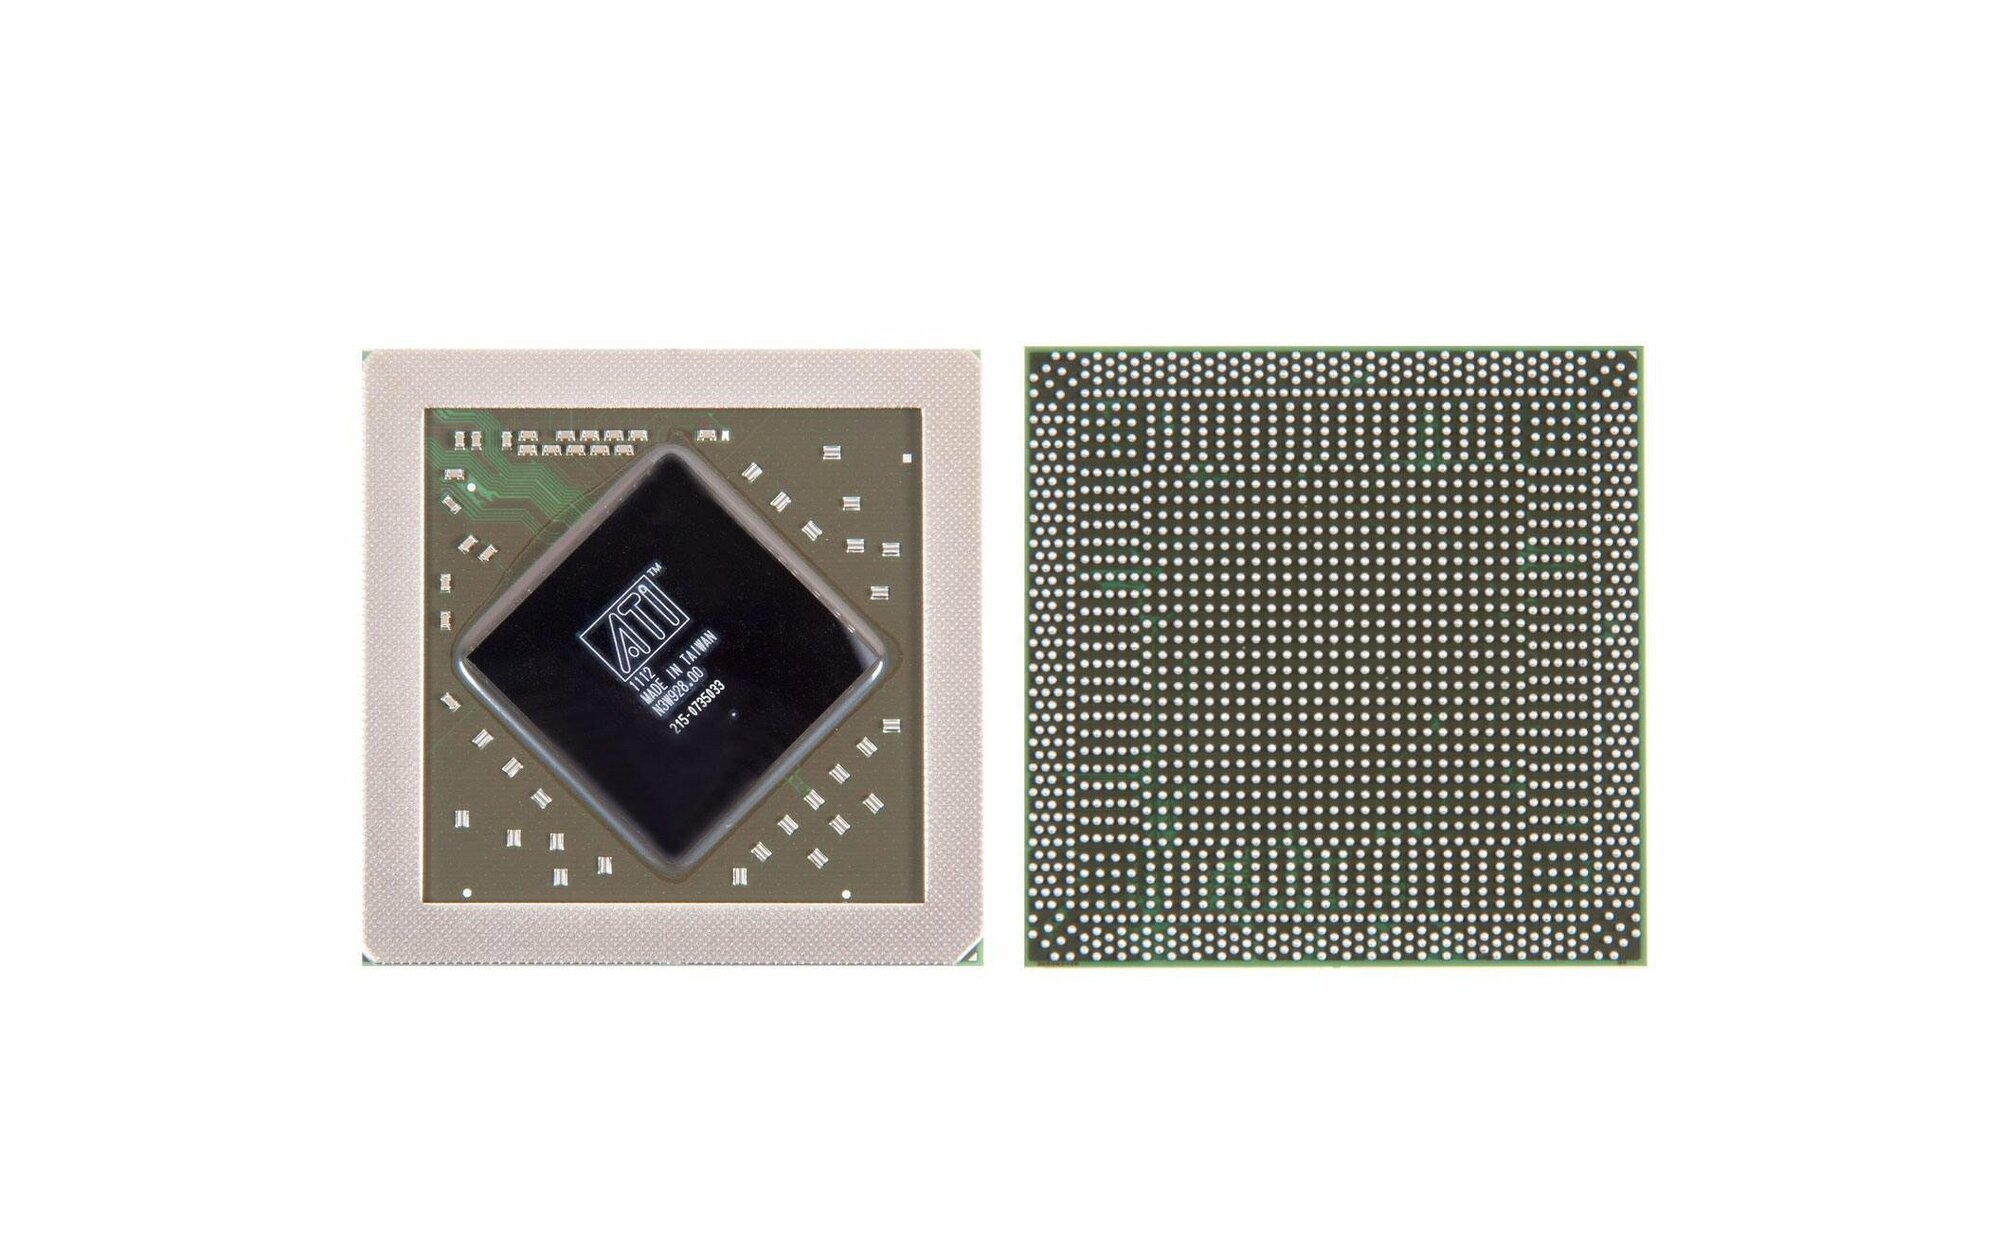 Видеочип AMD Mobility Radeon (video chip) HD5870 215-0735033